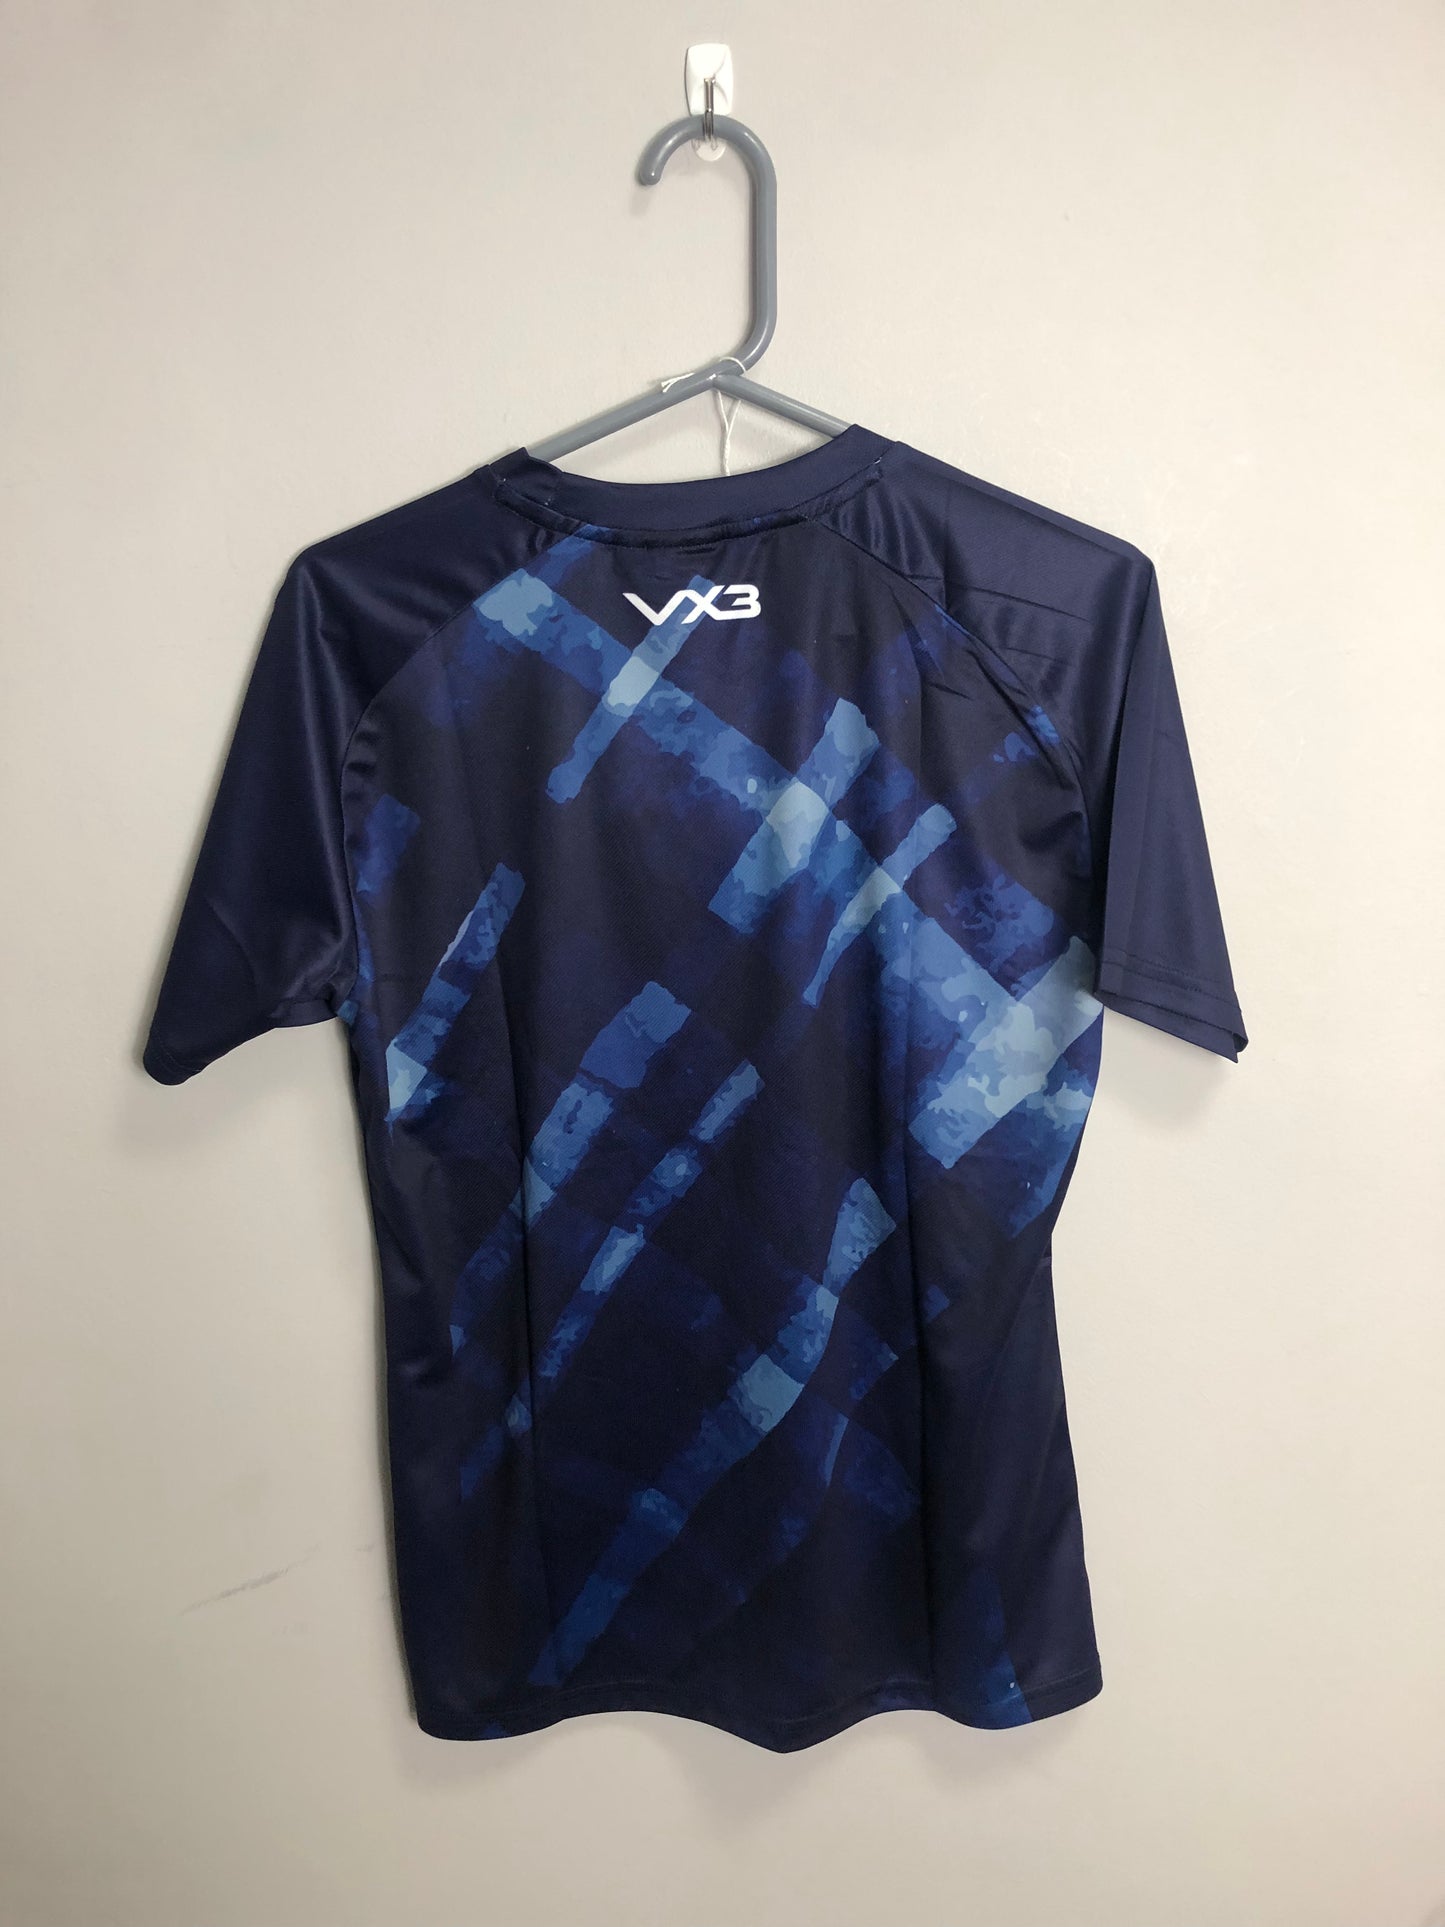 Scotland RL Tee Shirt